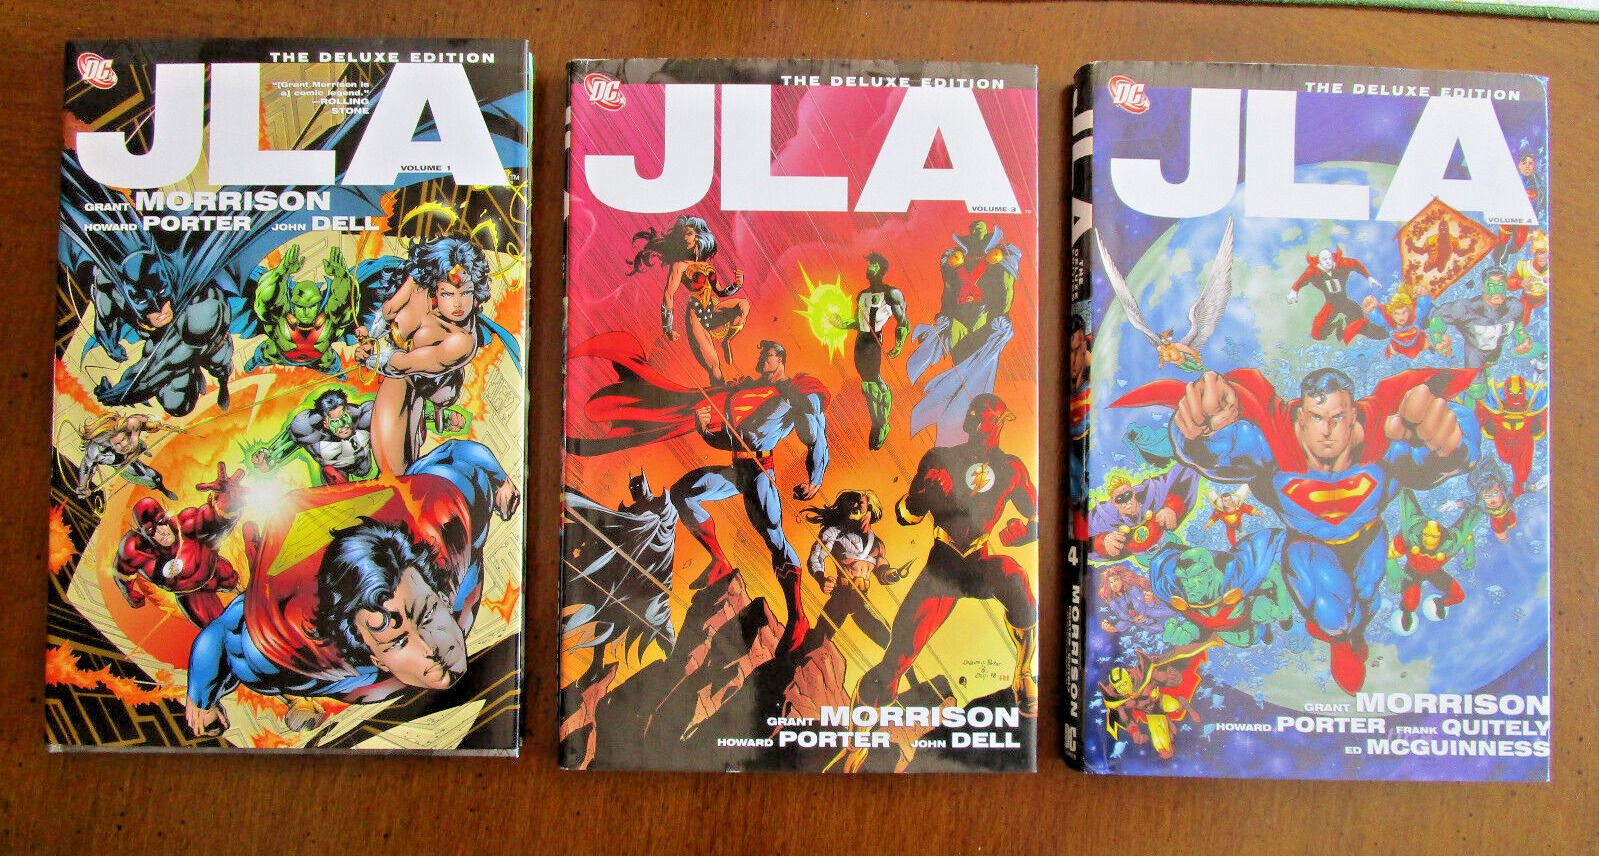 JLA Deluxe Edition (Grant Morrison) Vol 1 3 4 - DC Comics - HC/DJ - 1st Printing